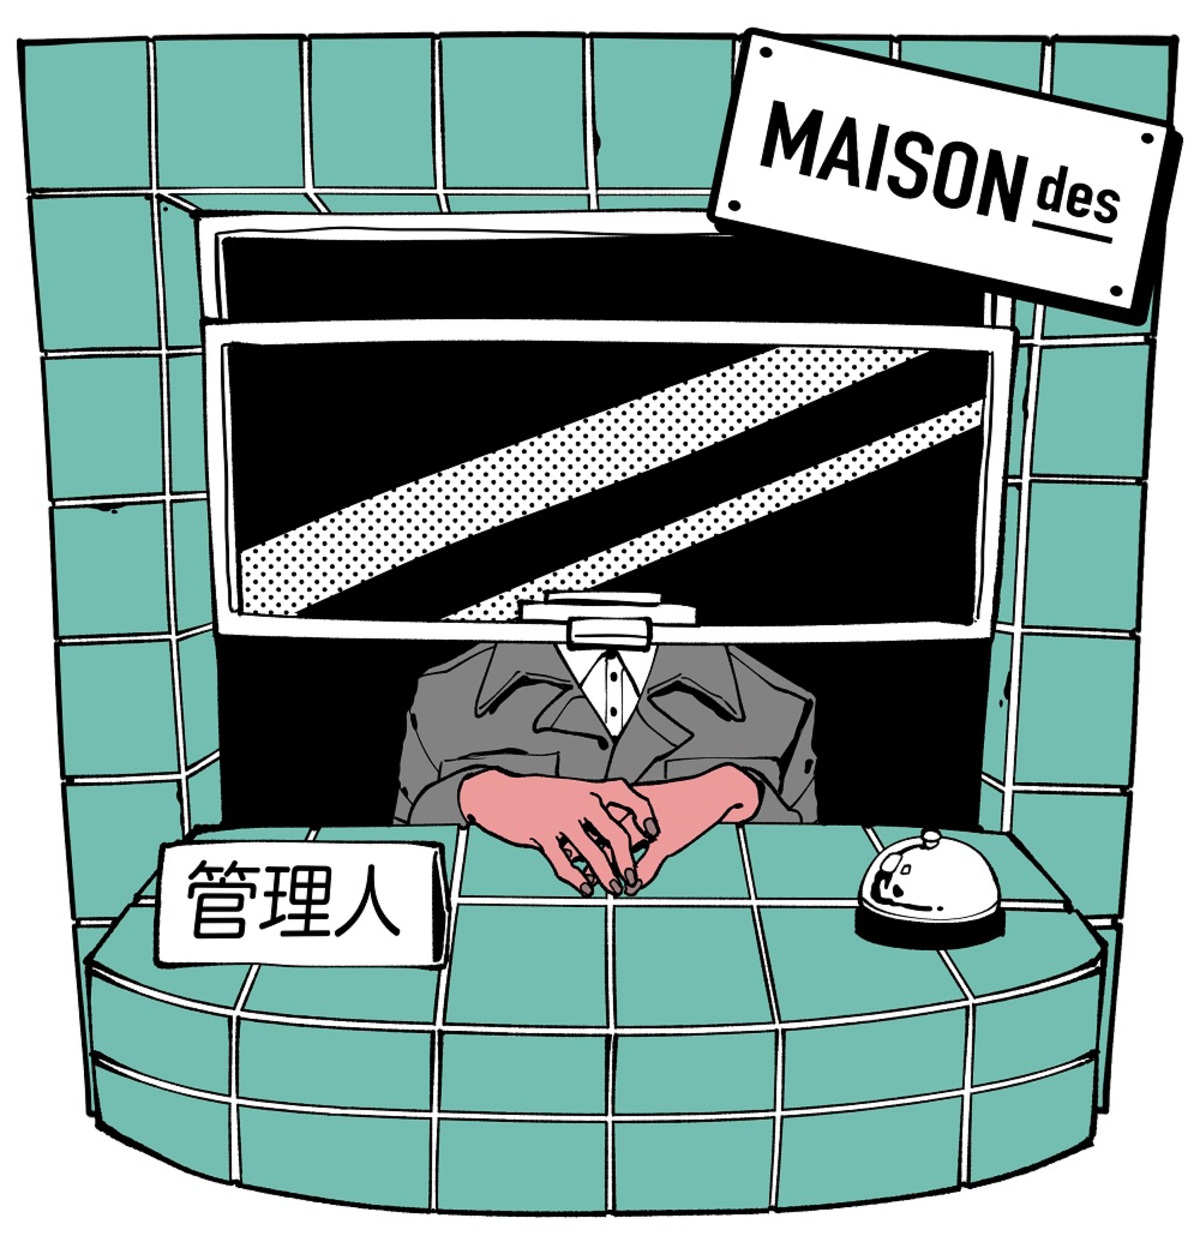 MAISONdes、TVアニメ